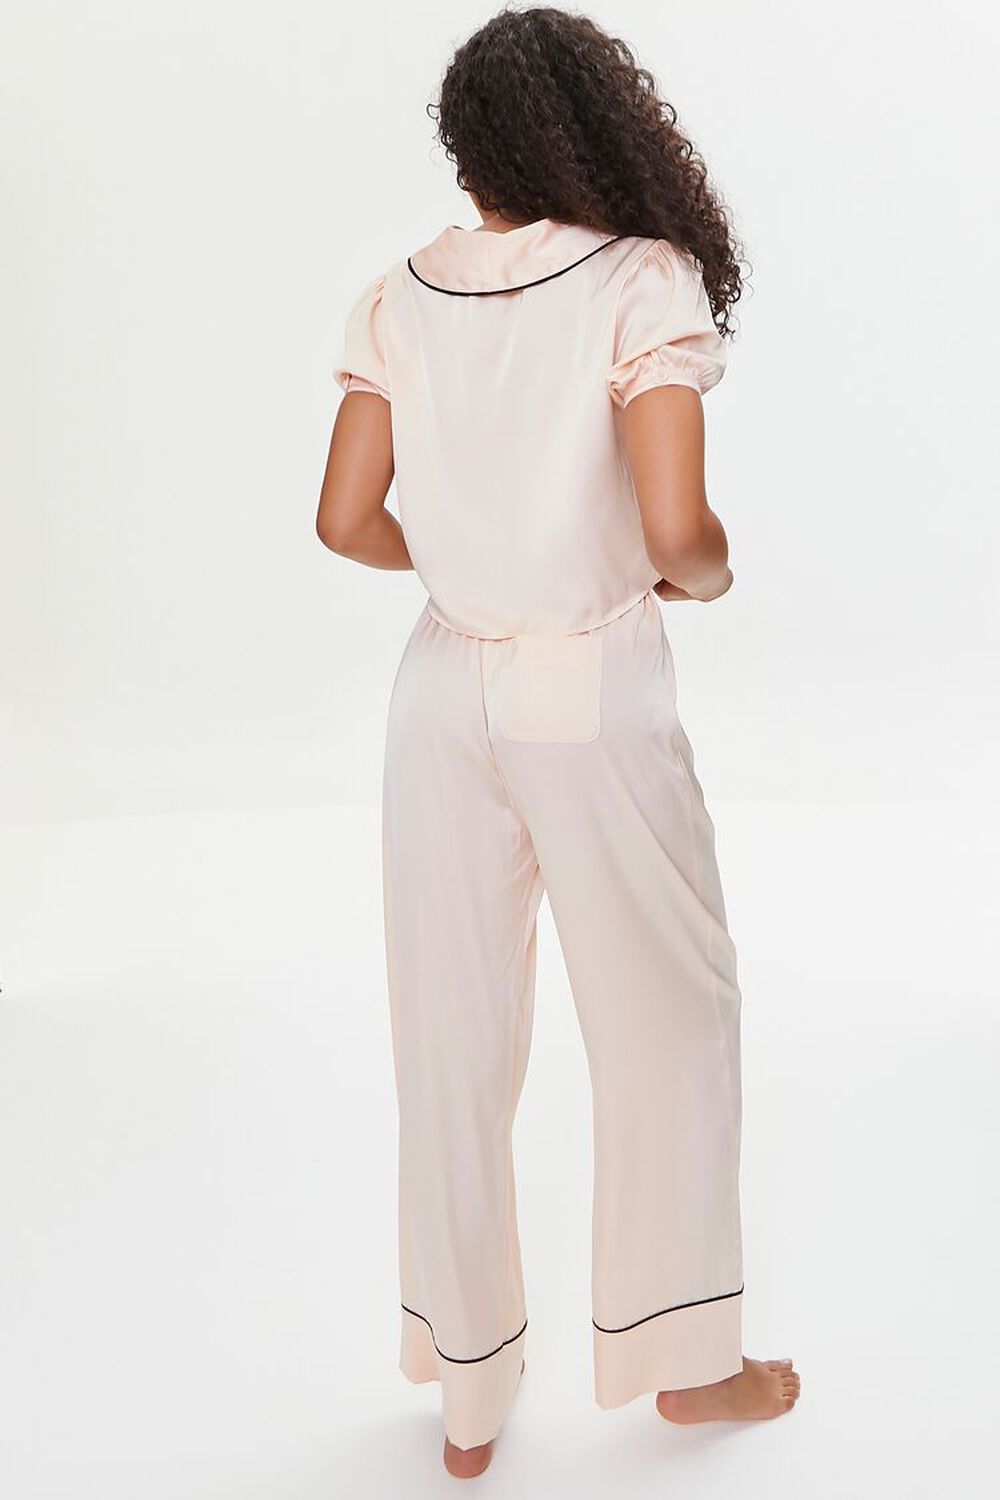 BLUSH/BLACK Contrast-Trim Shirt & Pajama Set, image 3